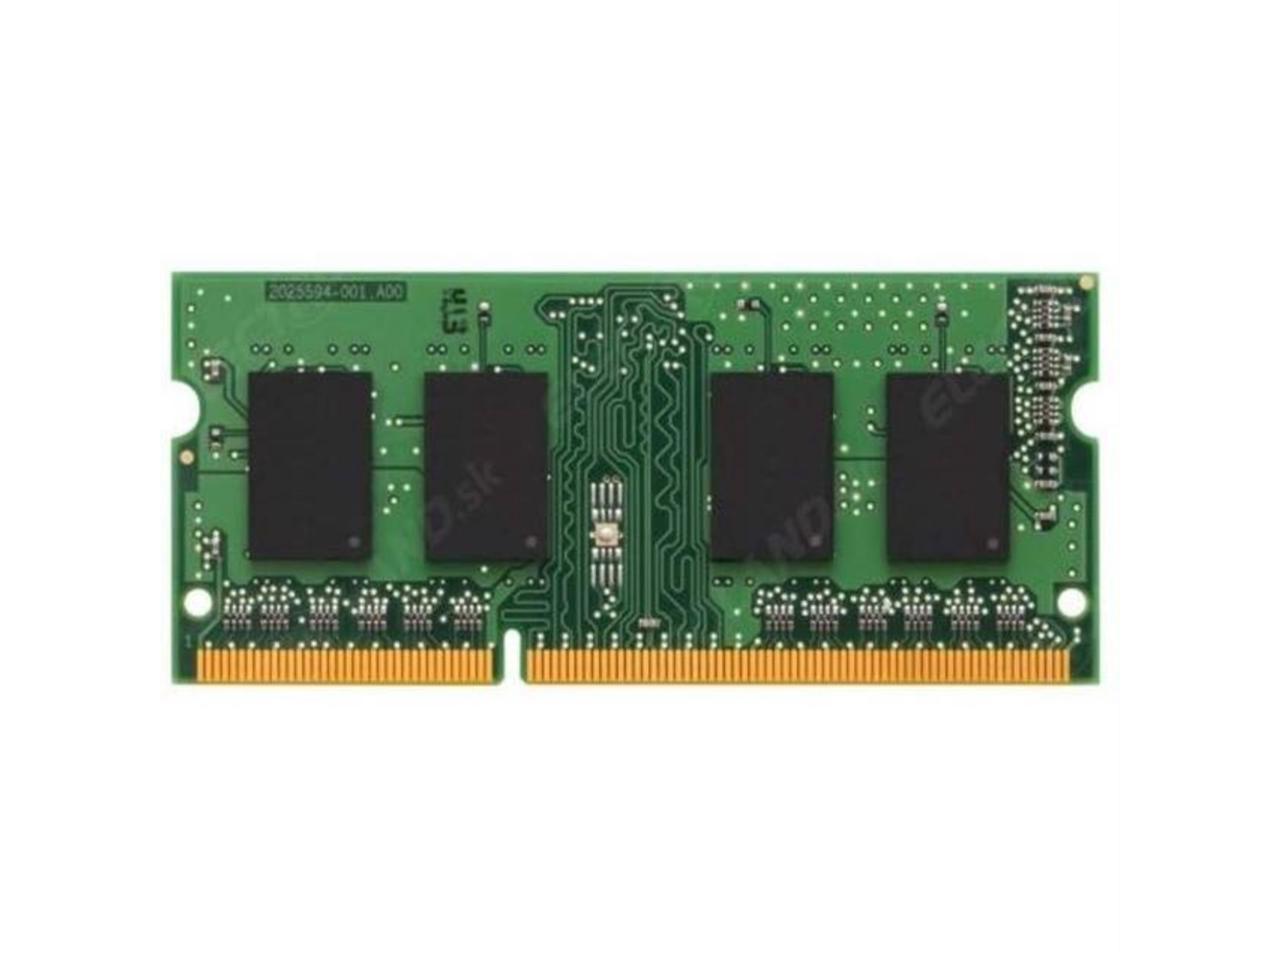 Kingston Memory KVR32S22S8/8 8GB 3200MHz DDR4 Non-ECC CL22 SODIMM 1Rx8 Retail